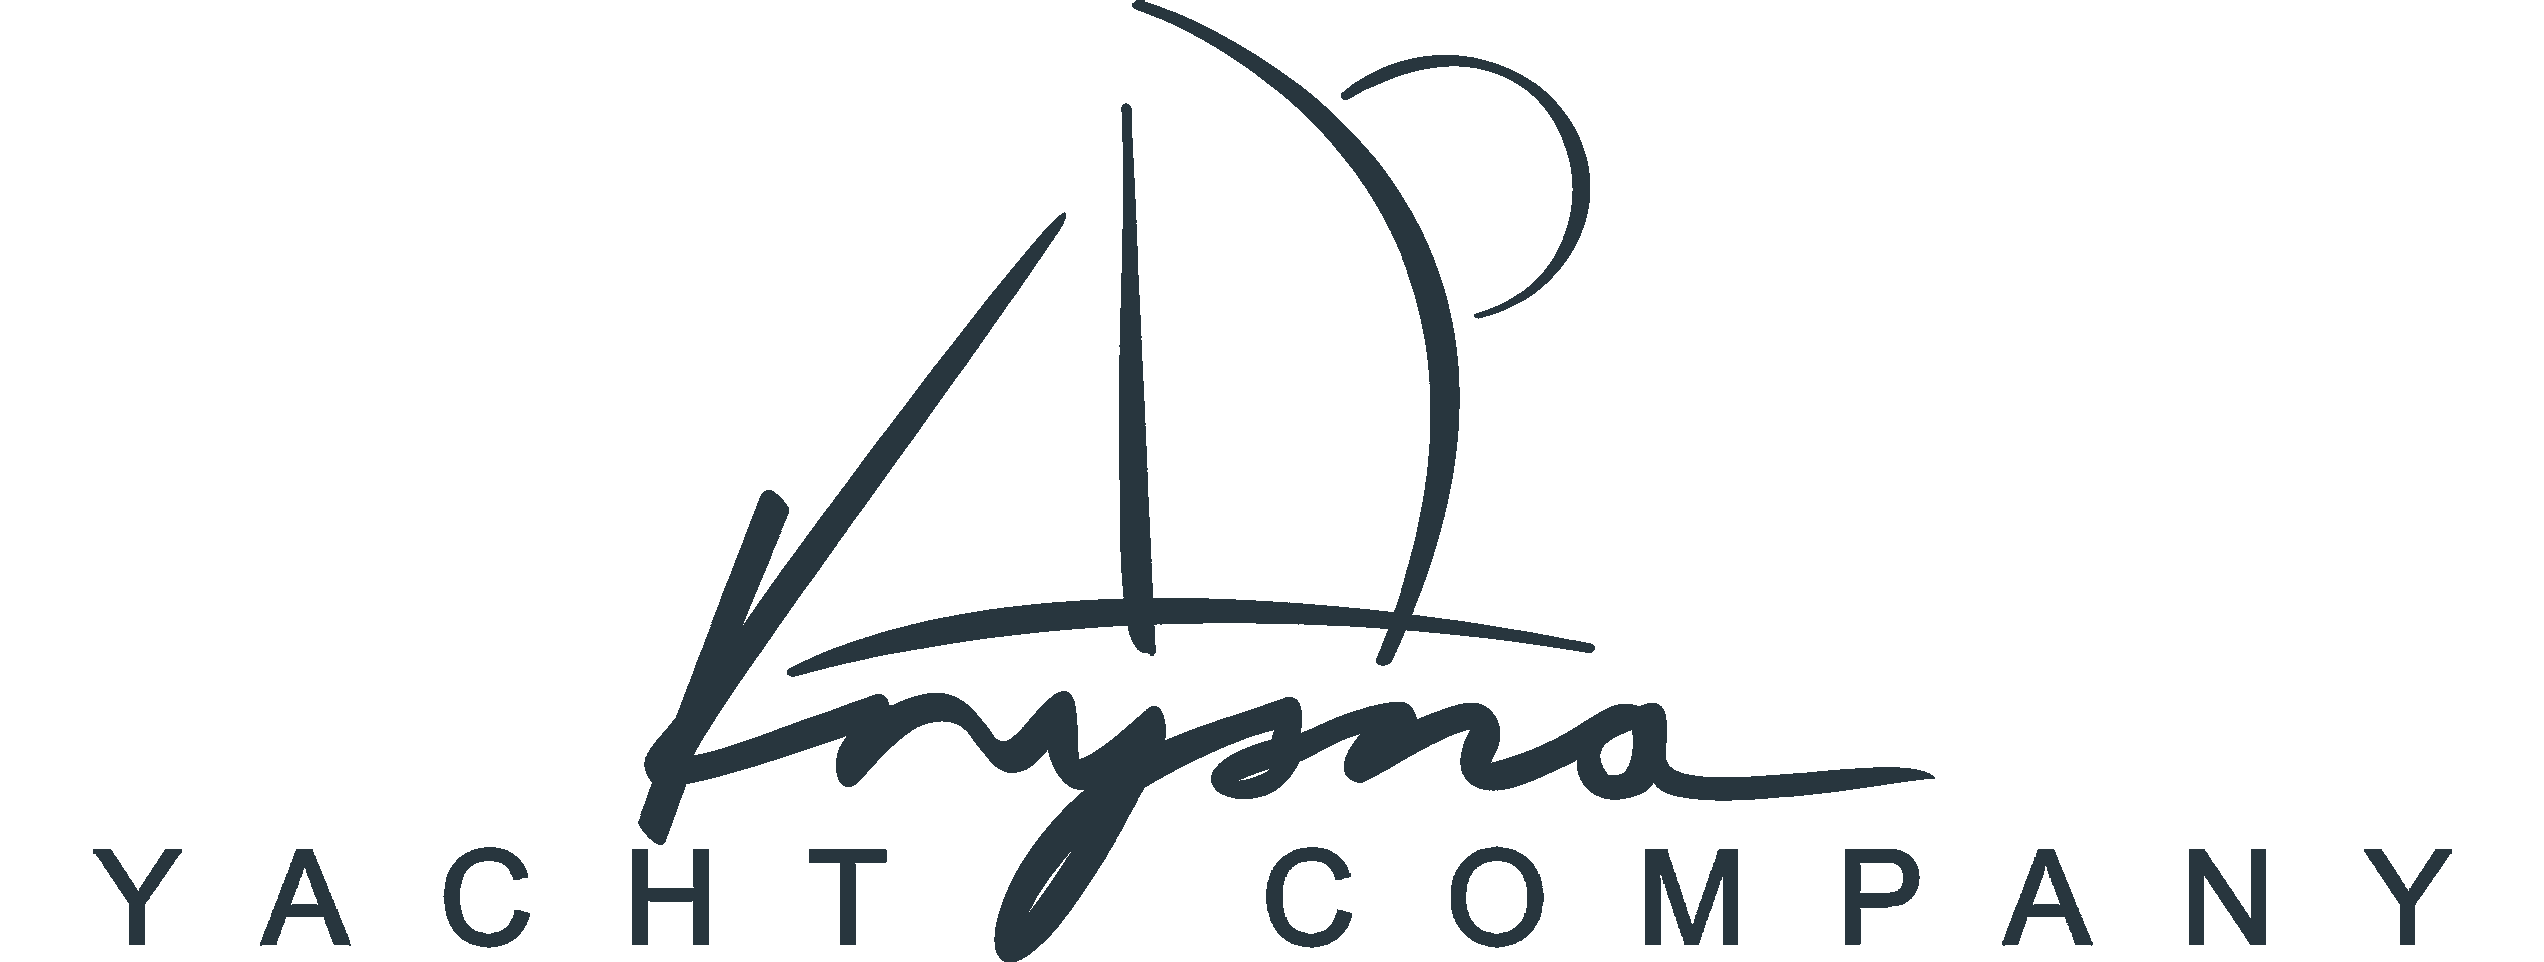 Catamaran Logo - Exclusive Preview of The Knysna 500 SE Catamaran - Knysna Yacht Company